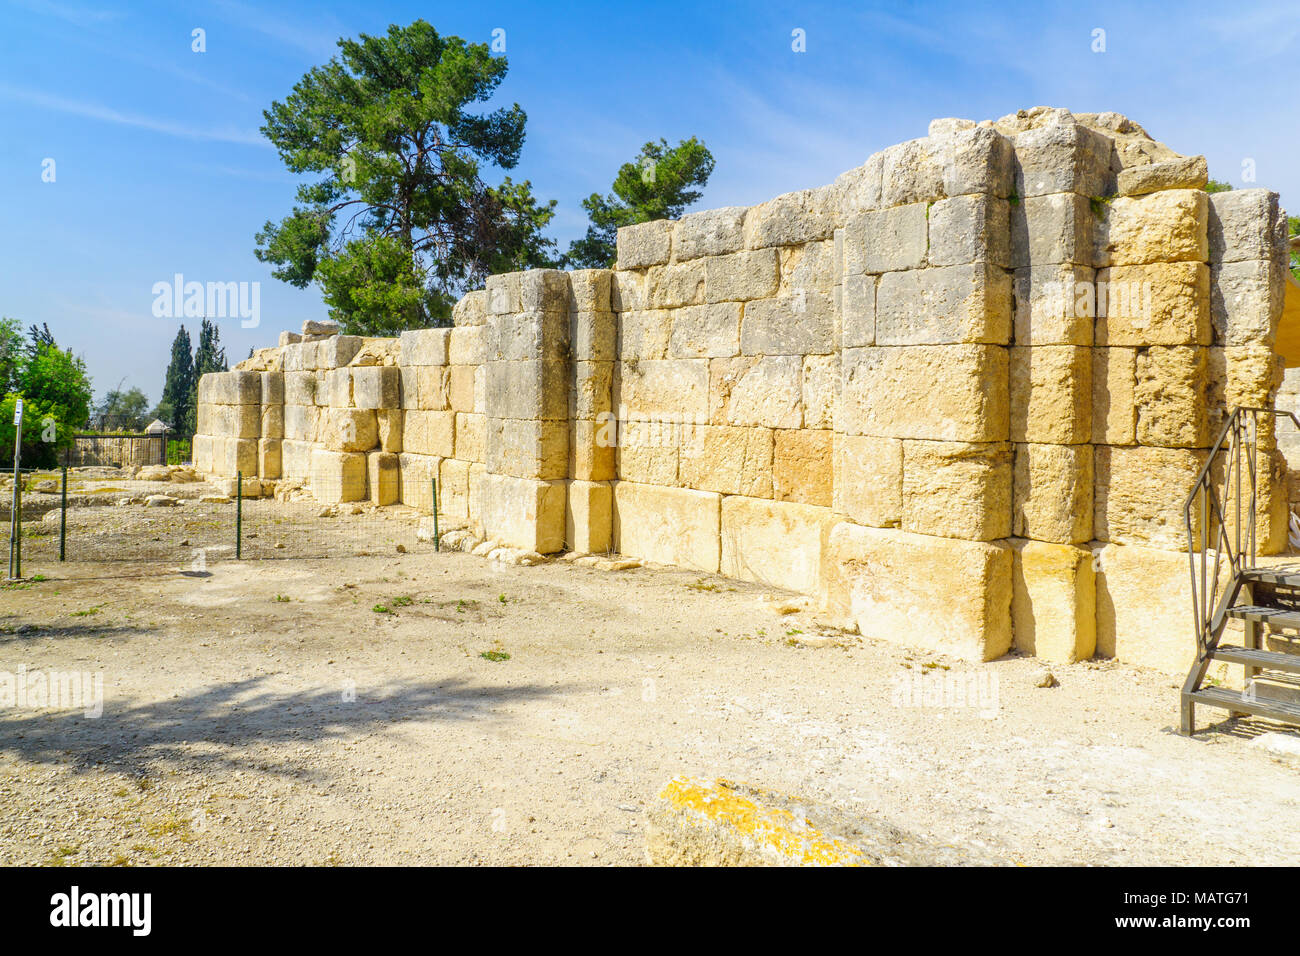 Les vestiges de la Basilique de saint lieu d'Emmaus-Nicopolis, Israël Banque D'Images